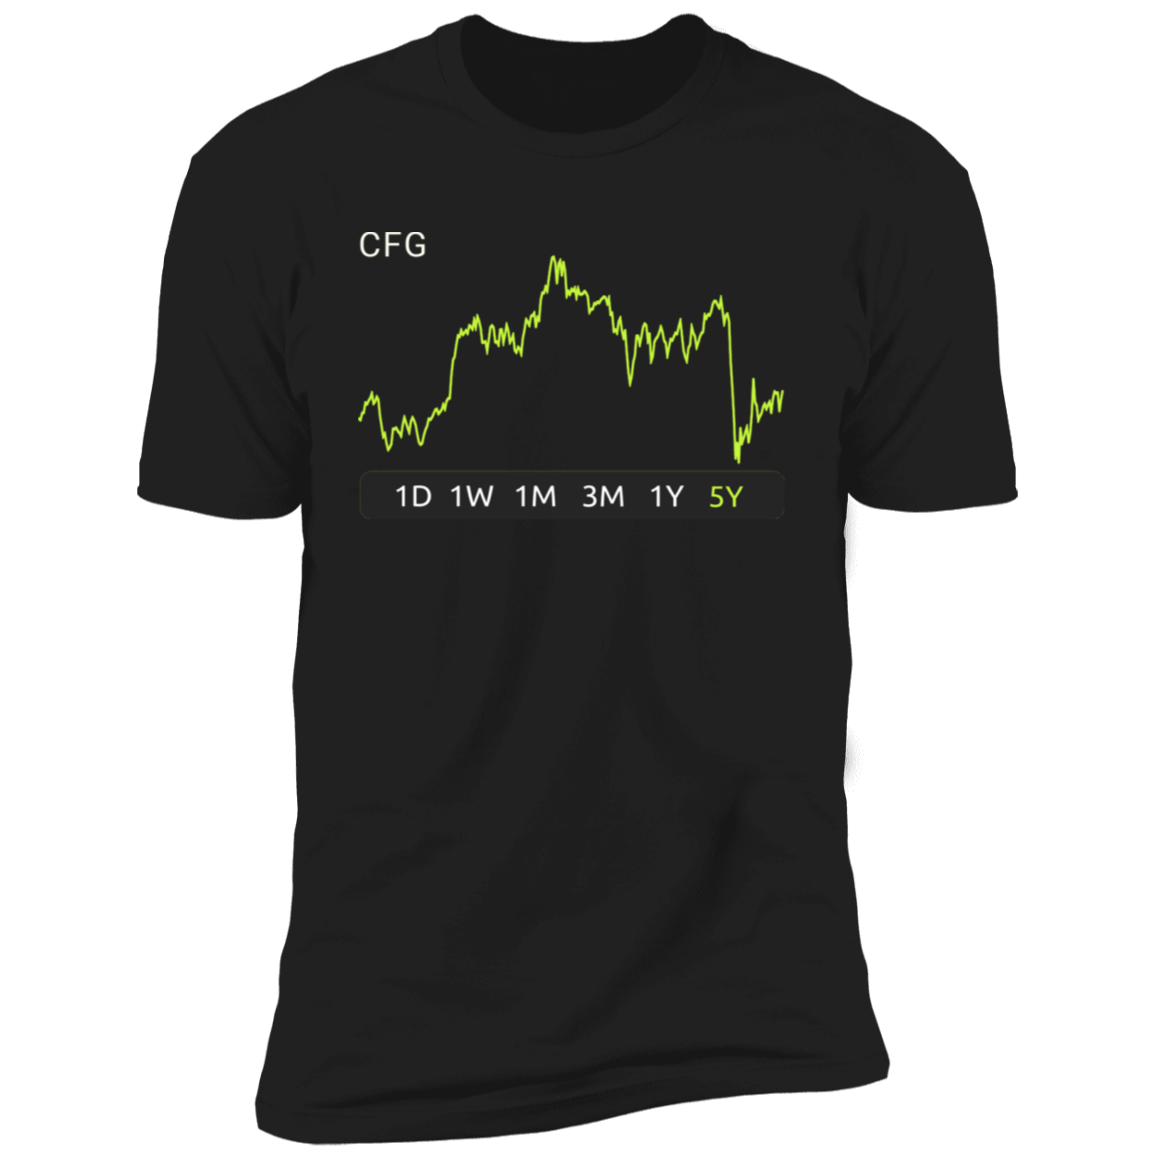 CFG Stock 5y Premium T-Shirt